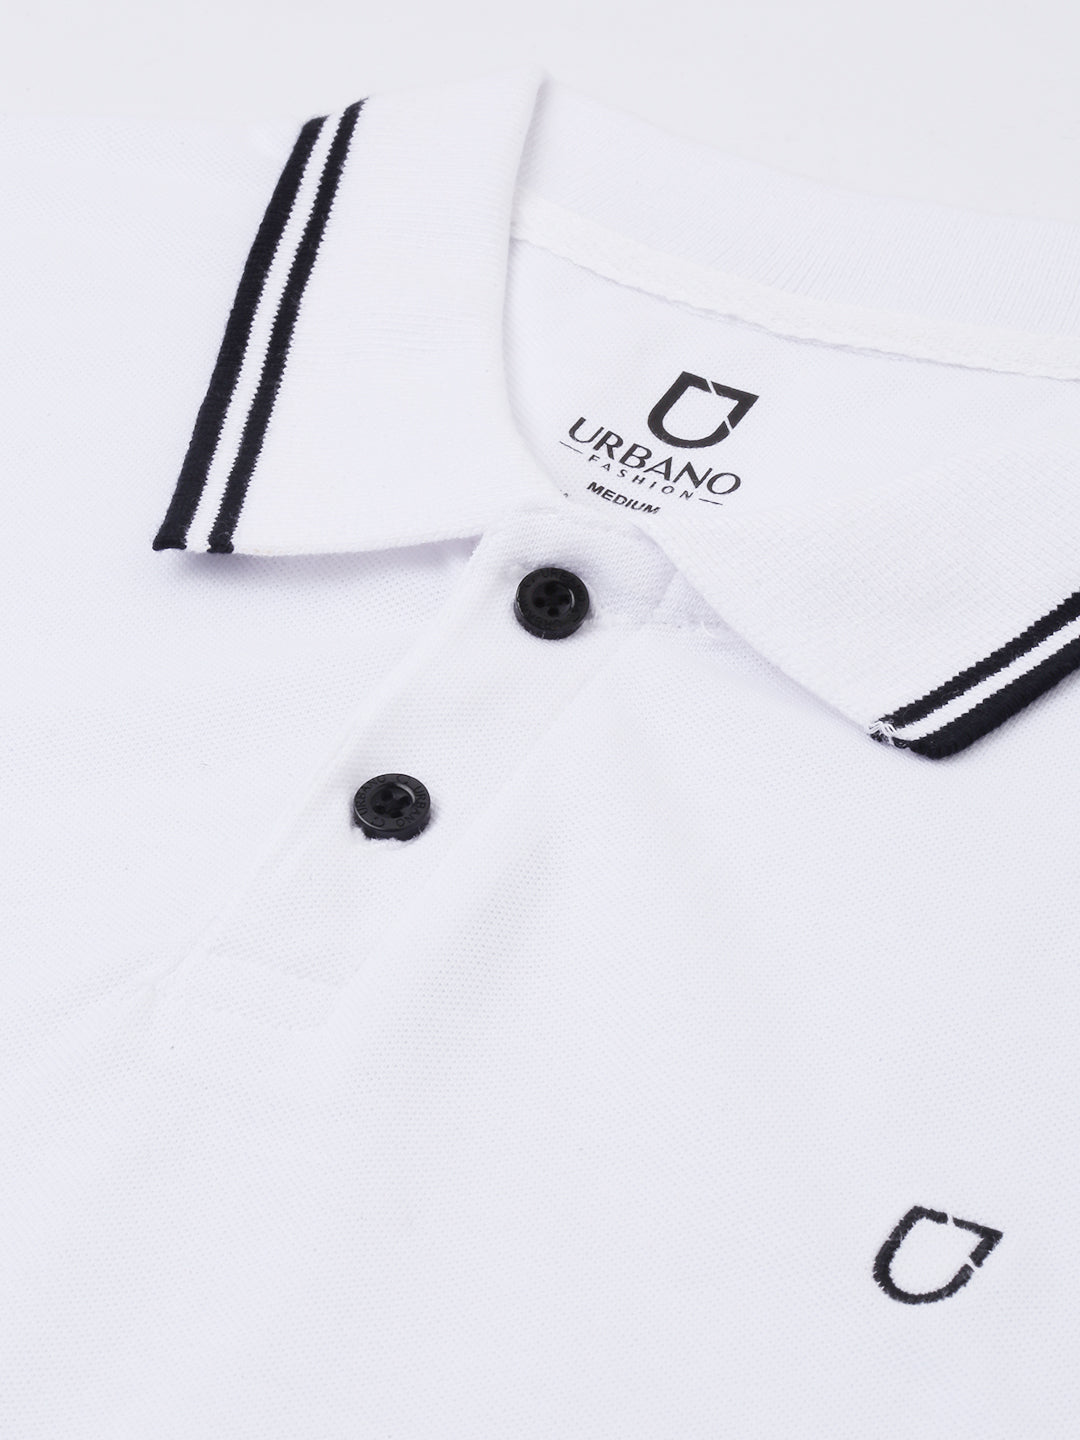 Men's White Solid Cotton Slim Fit Polo T-Shirt